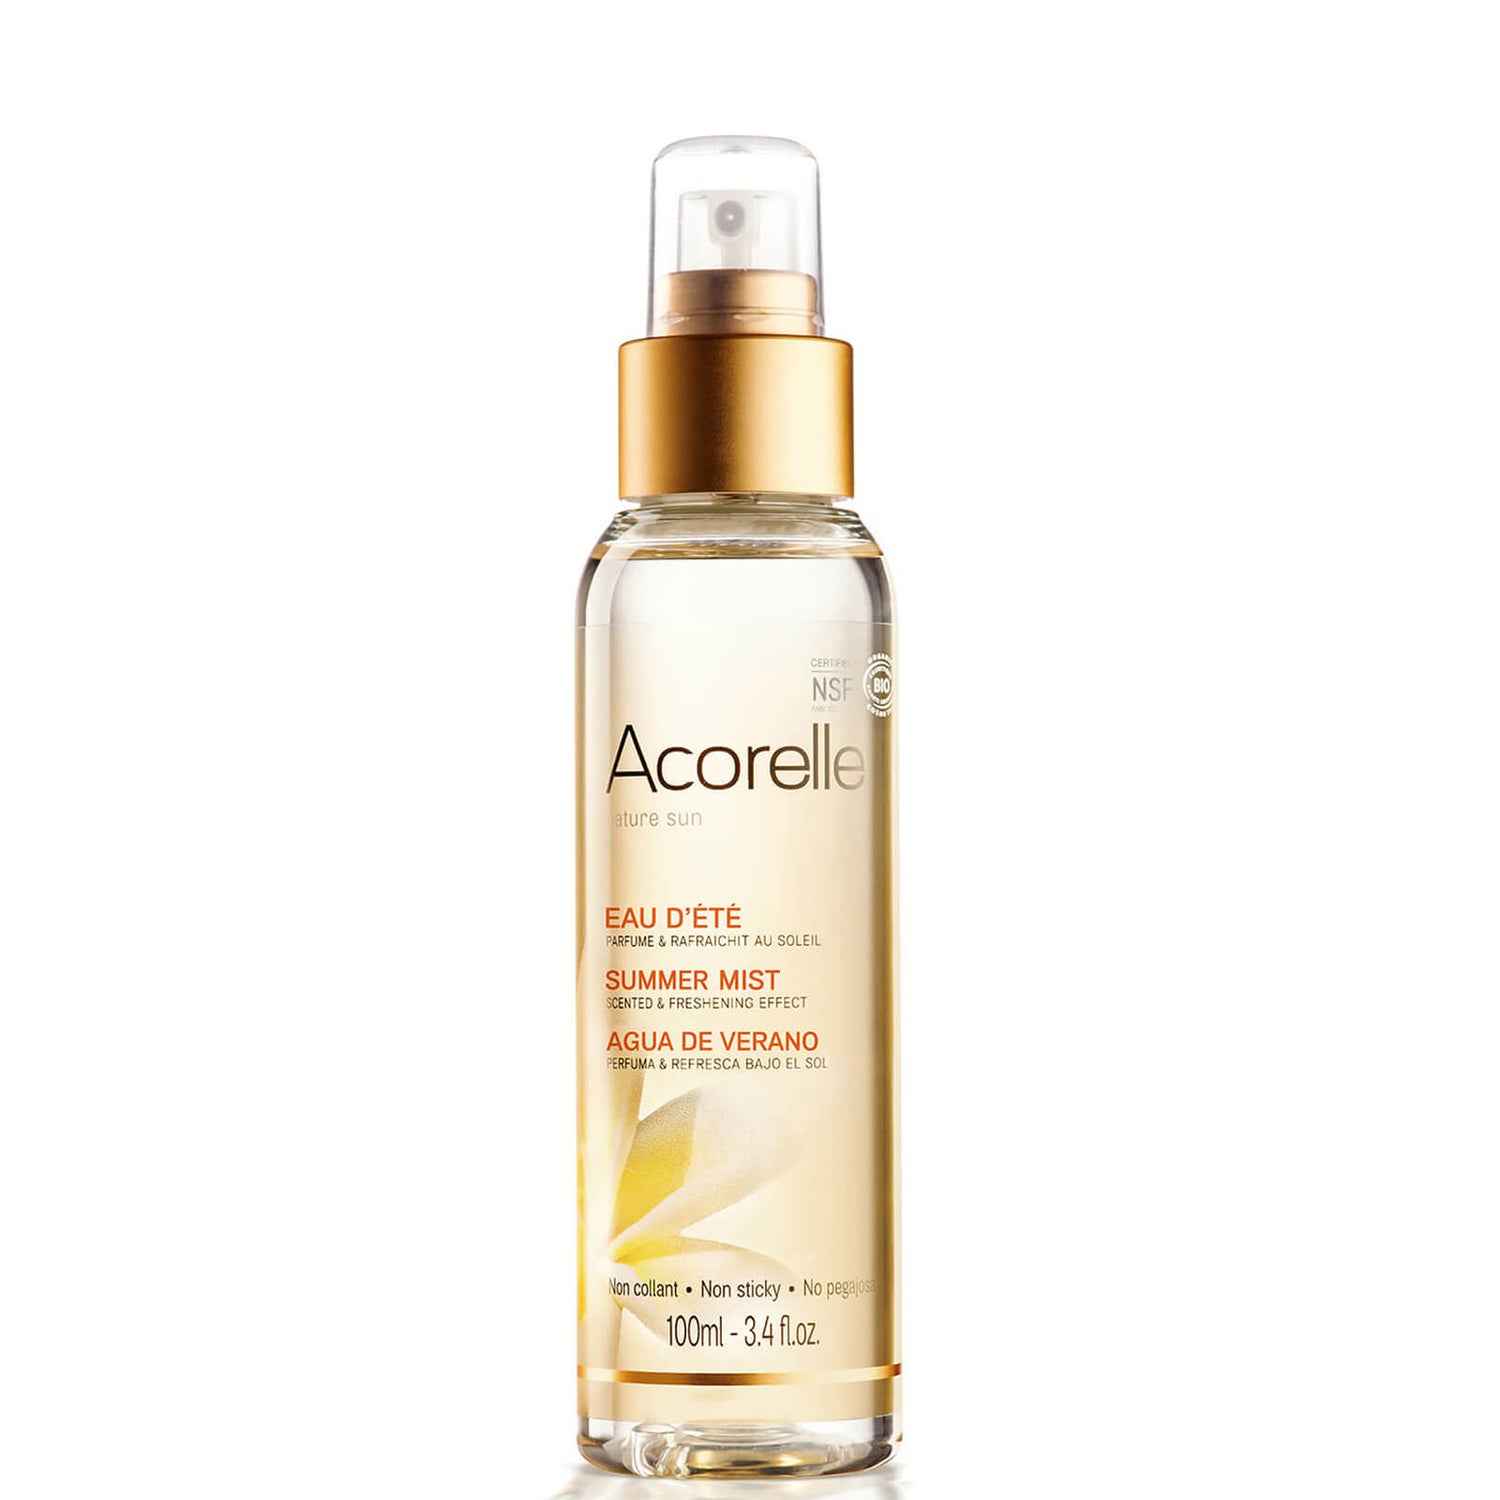 Acorelle Summer Mist Body Perfume woda perfumowana do ciała – 100 ml